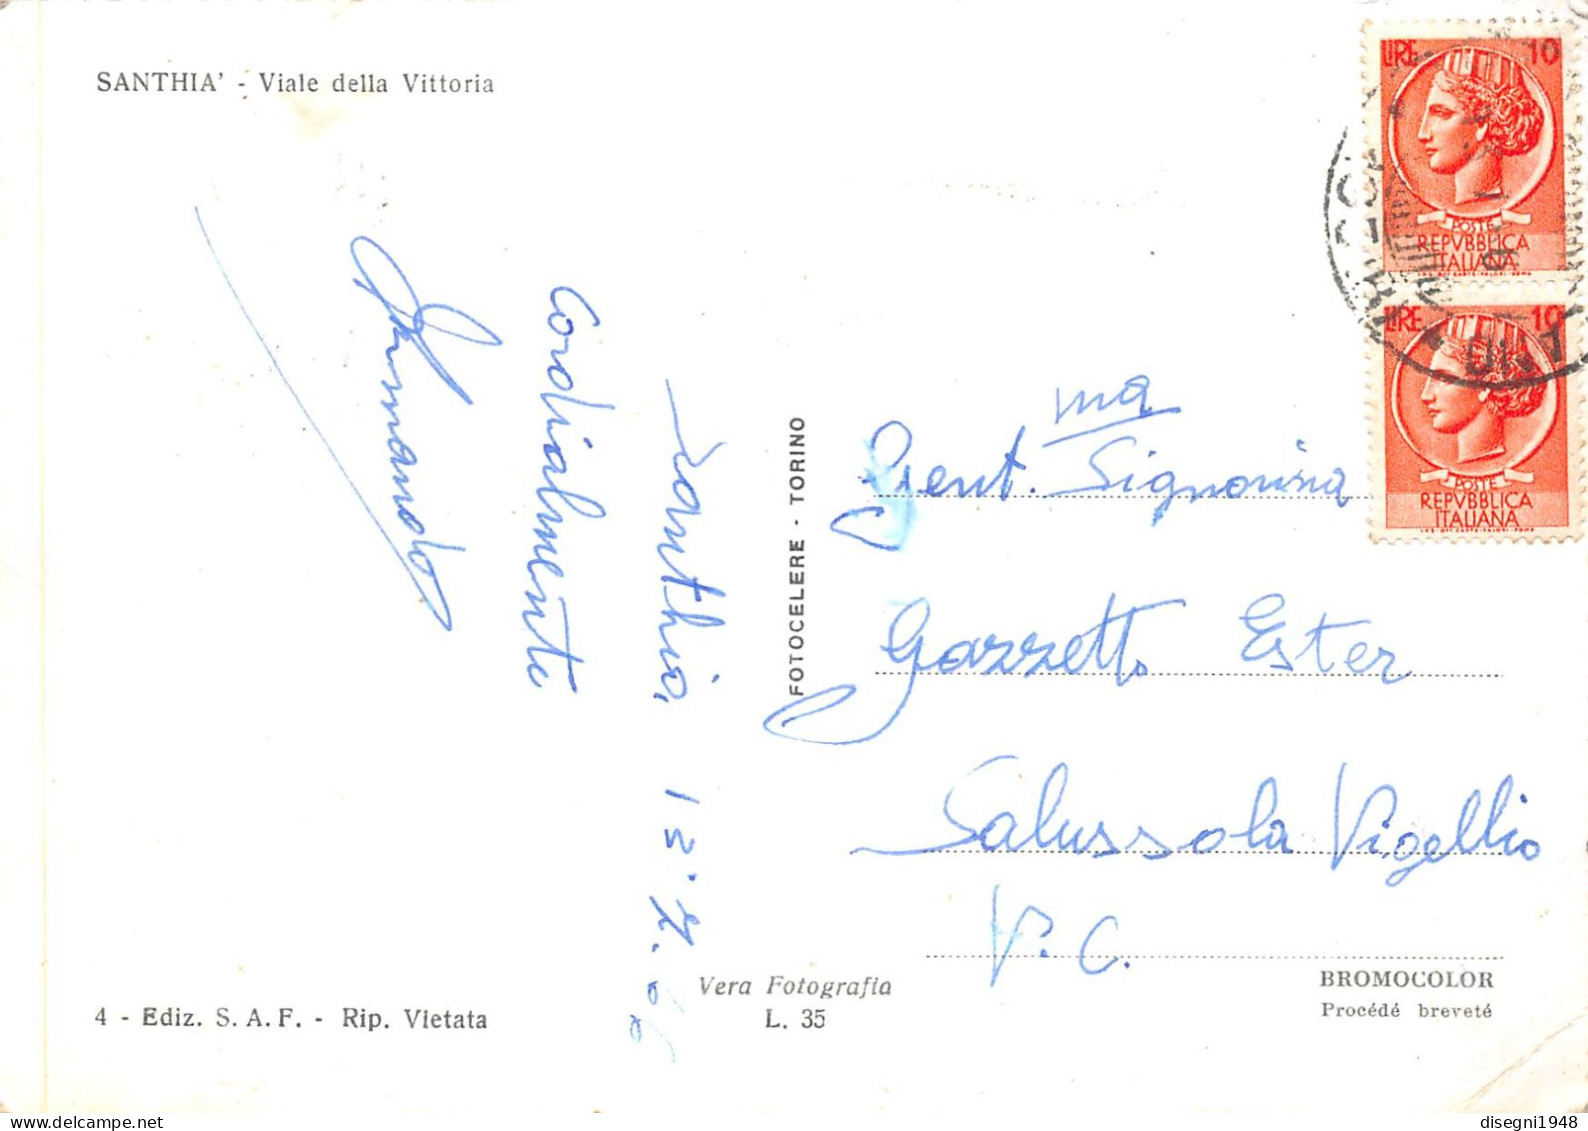 12787 "SANTHIA' (VC) - VIALE DELLA VITTORIA - STAZ. DI SERV. ESSO" CART. ORIG. ILLUSTR. SPED. 1972 - Vercelli